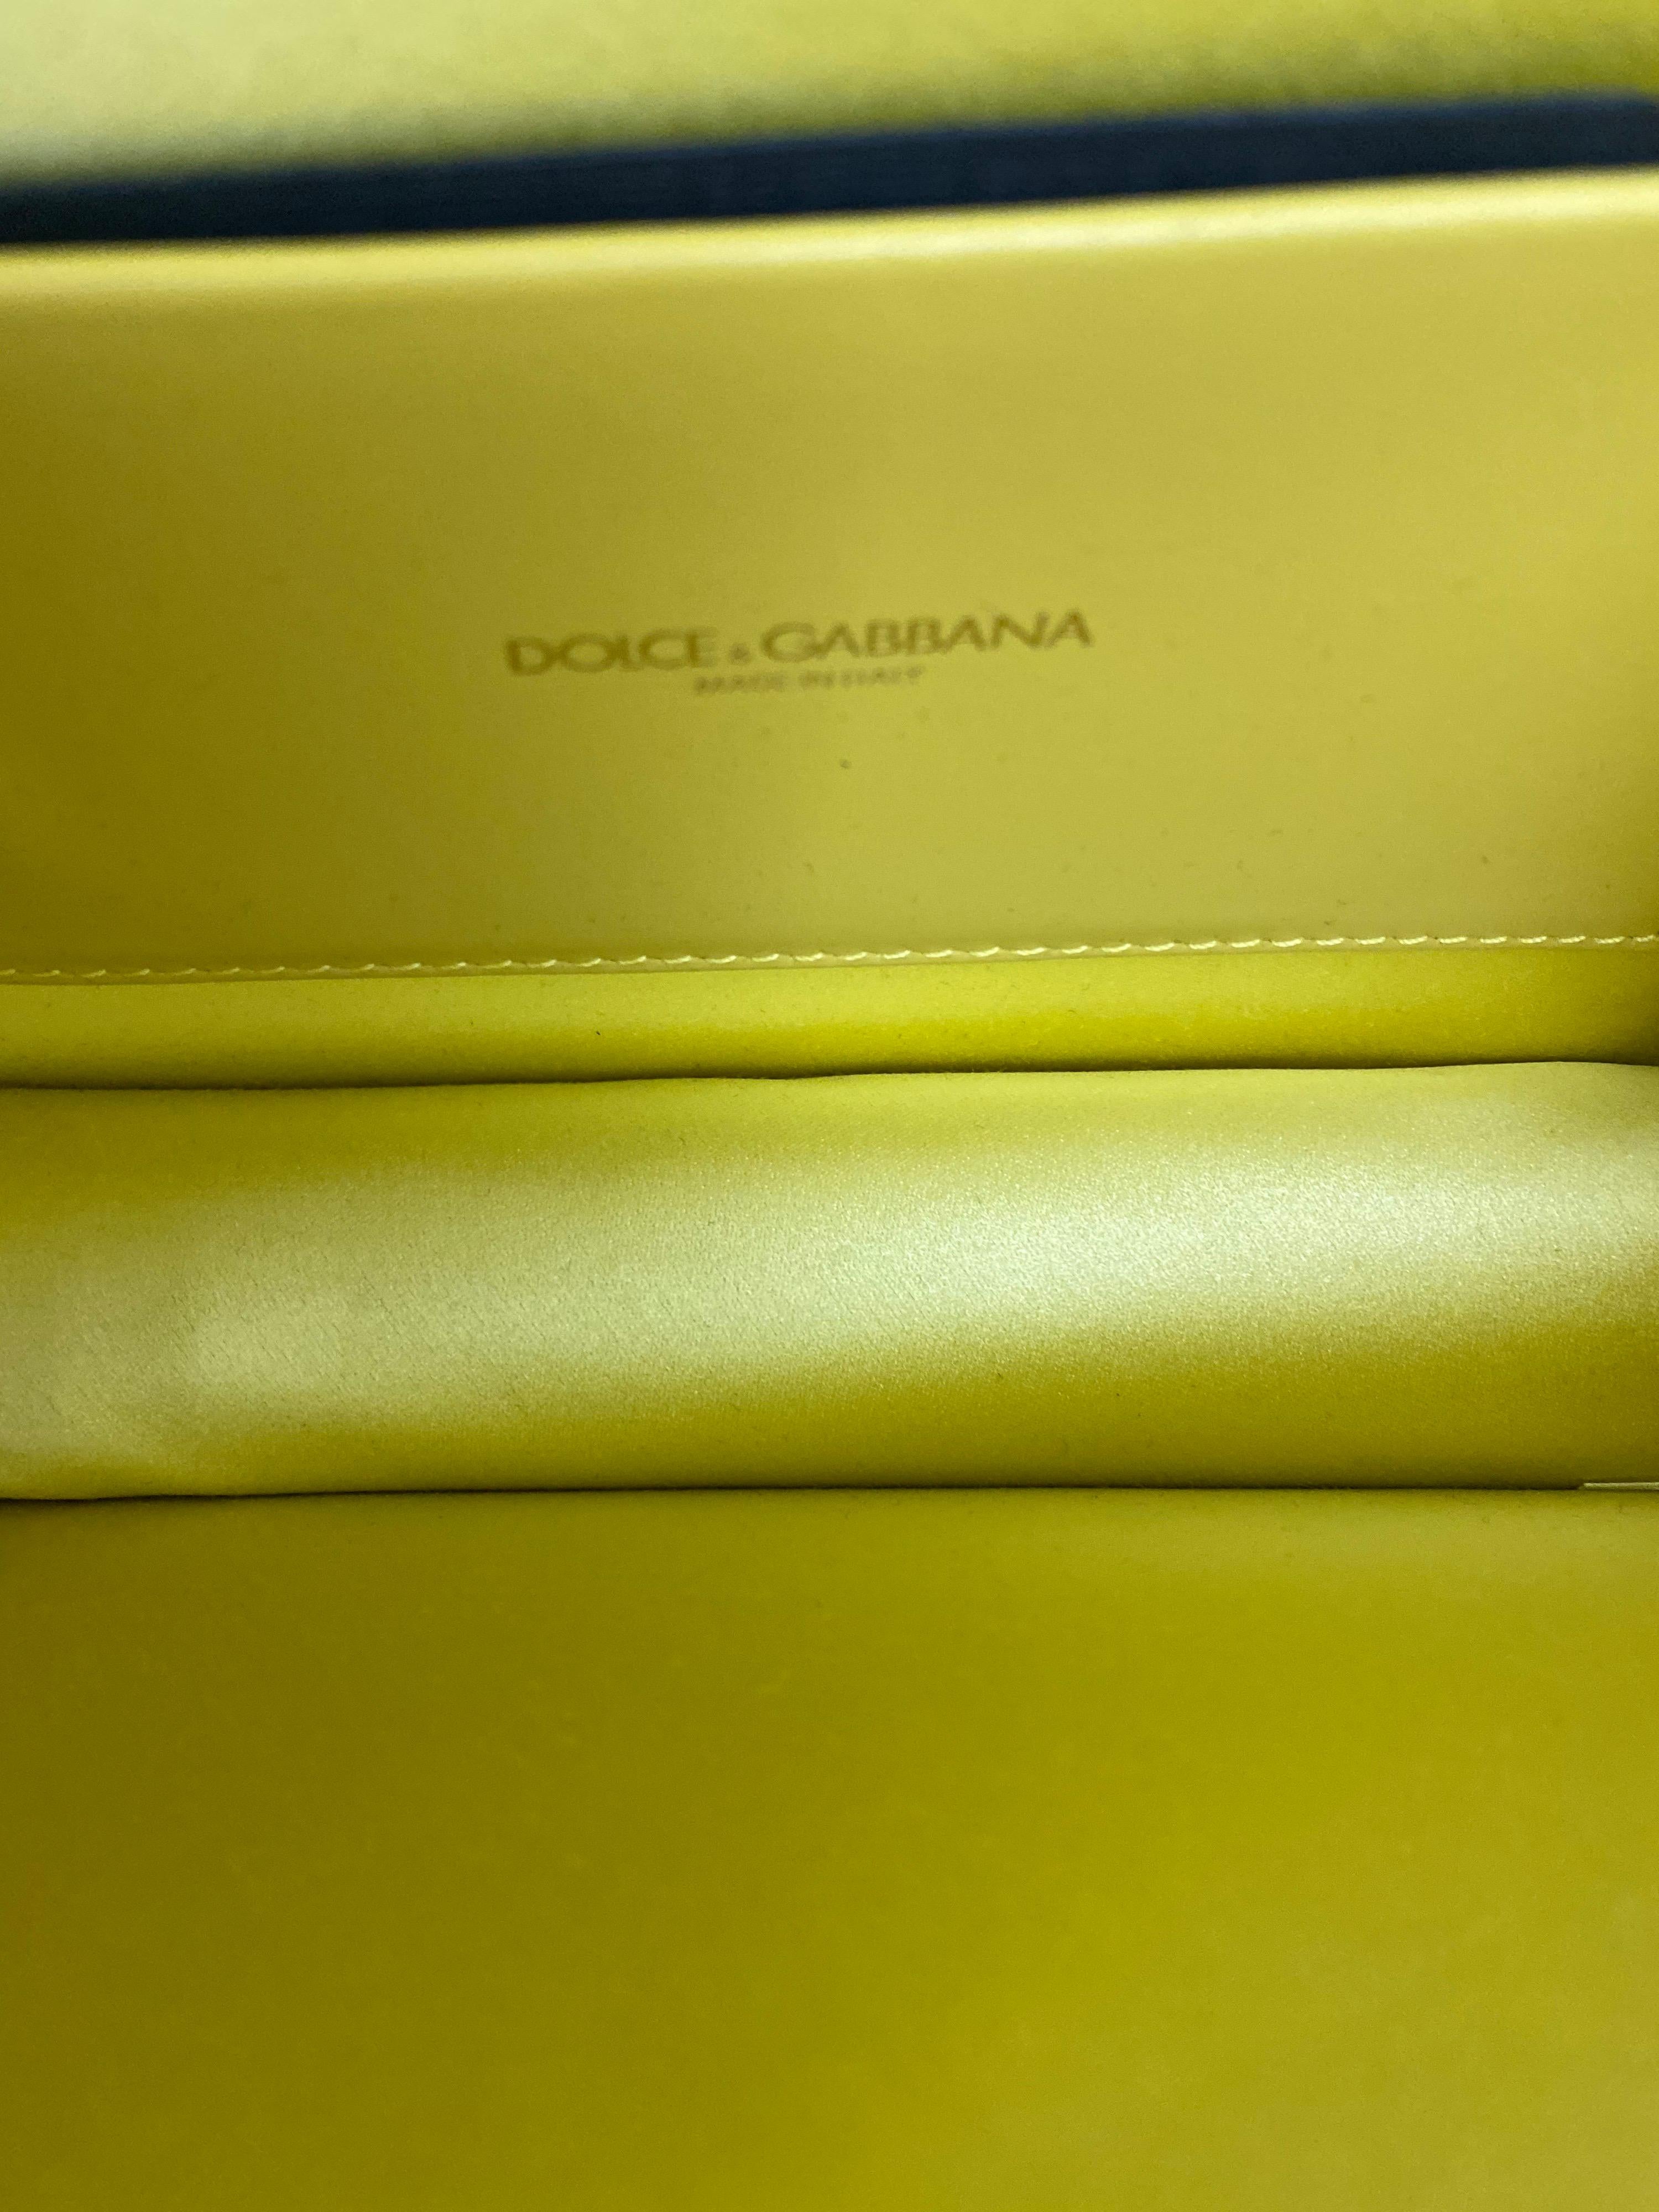 Dolce & Gabbana Yellow Satin Devotion Bag 1